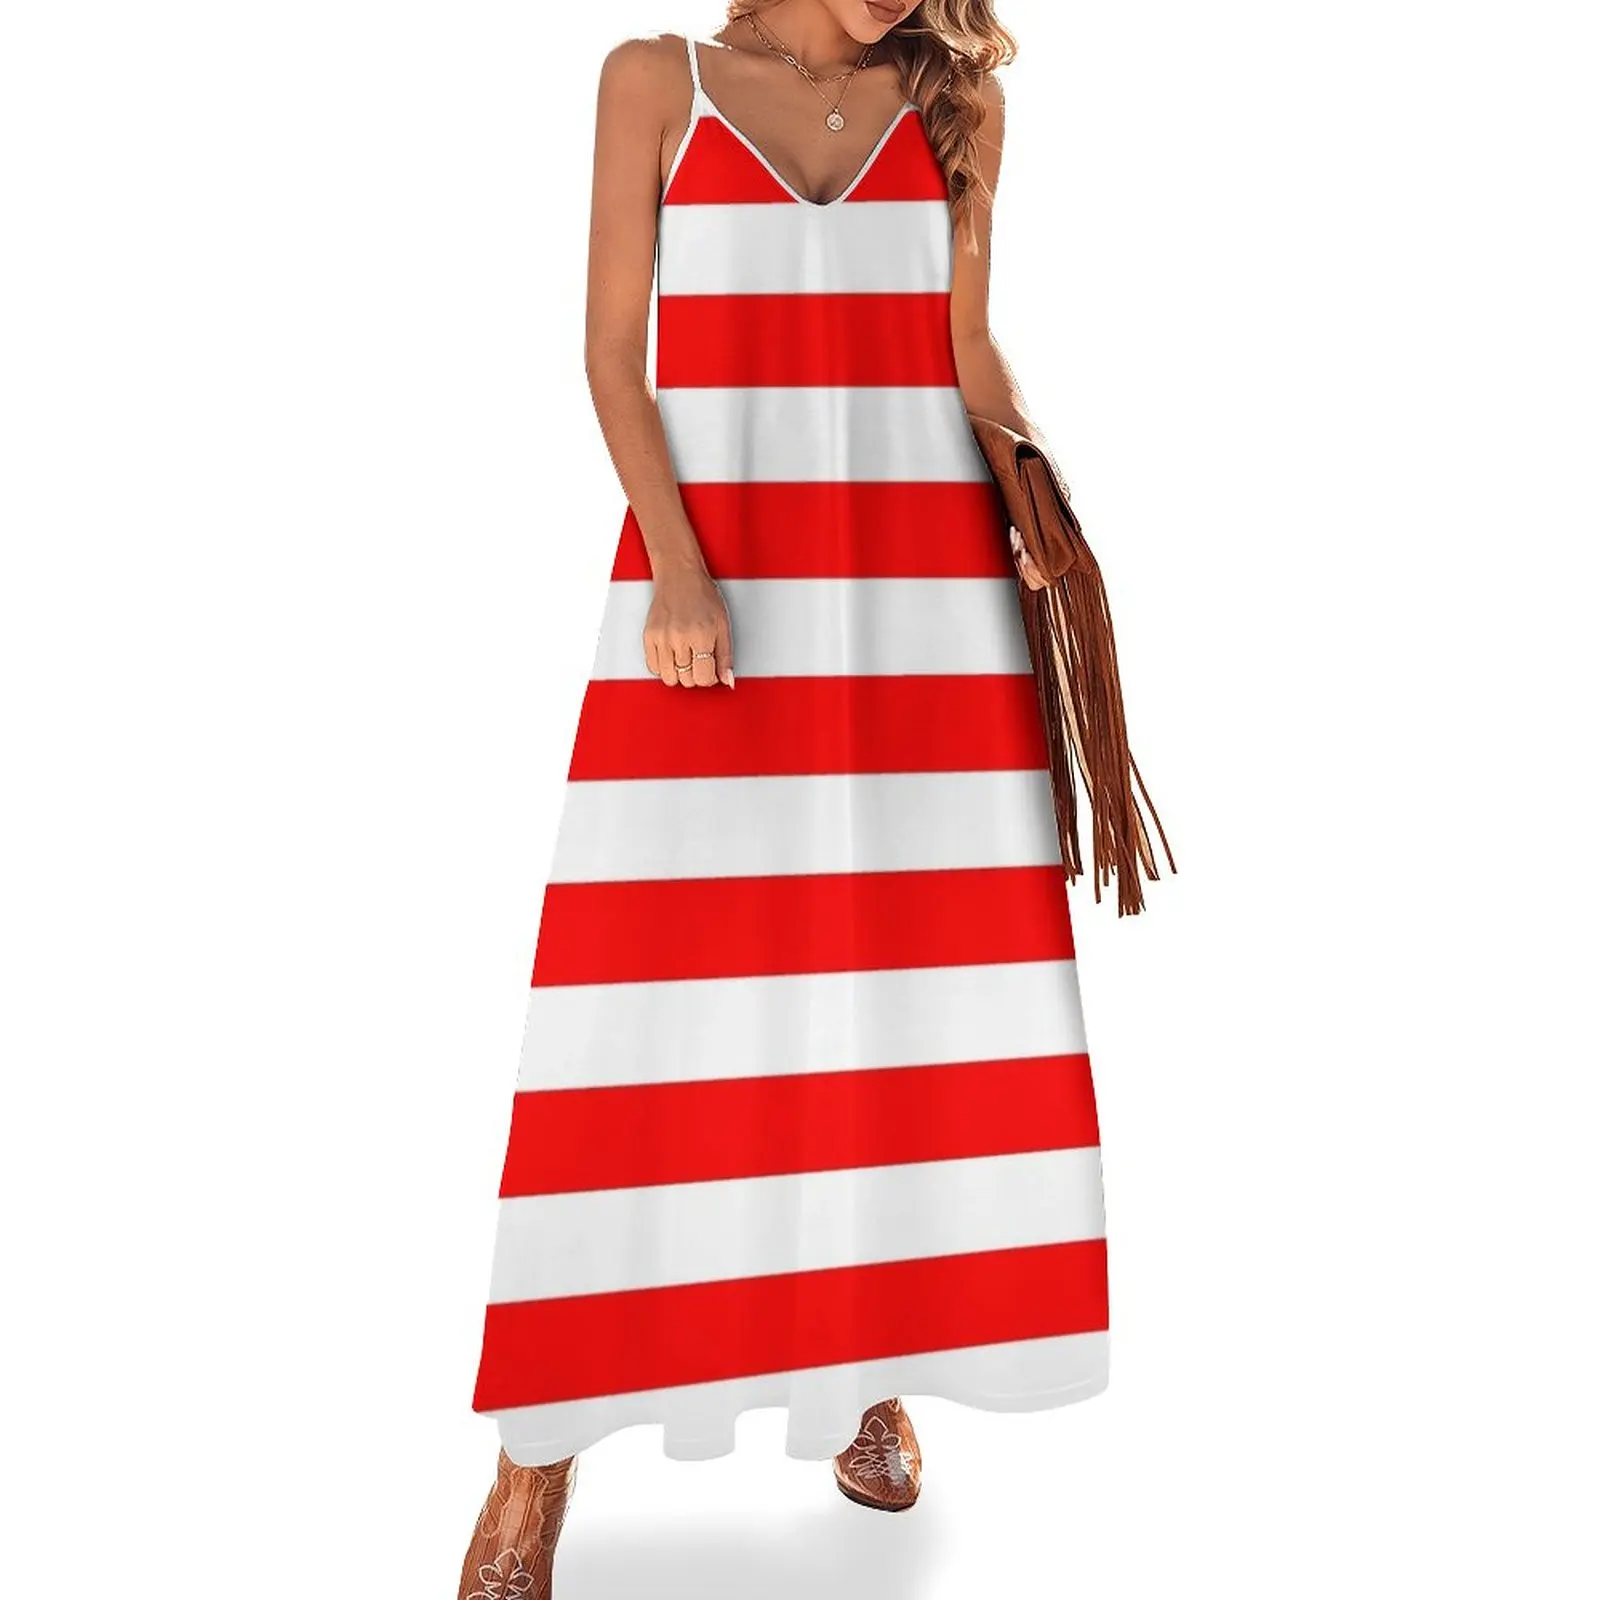 

Red and White Horizontal Stripes Sleeveless Dress dresses korean style women formal occasion dresses beach dress